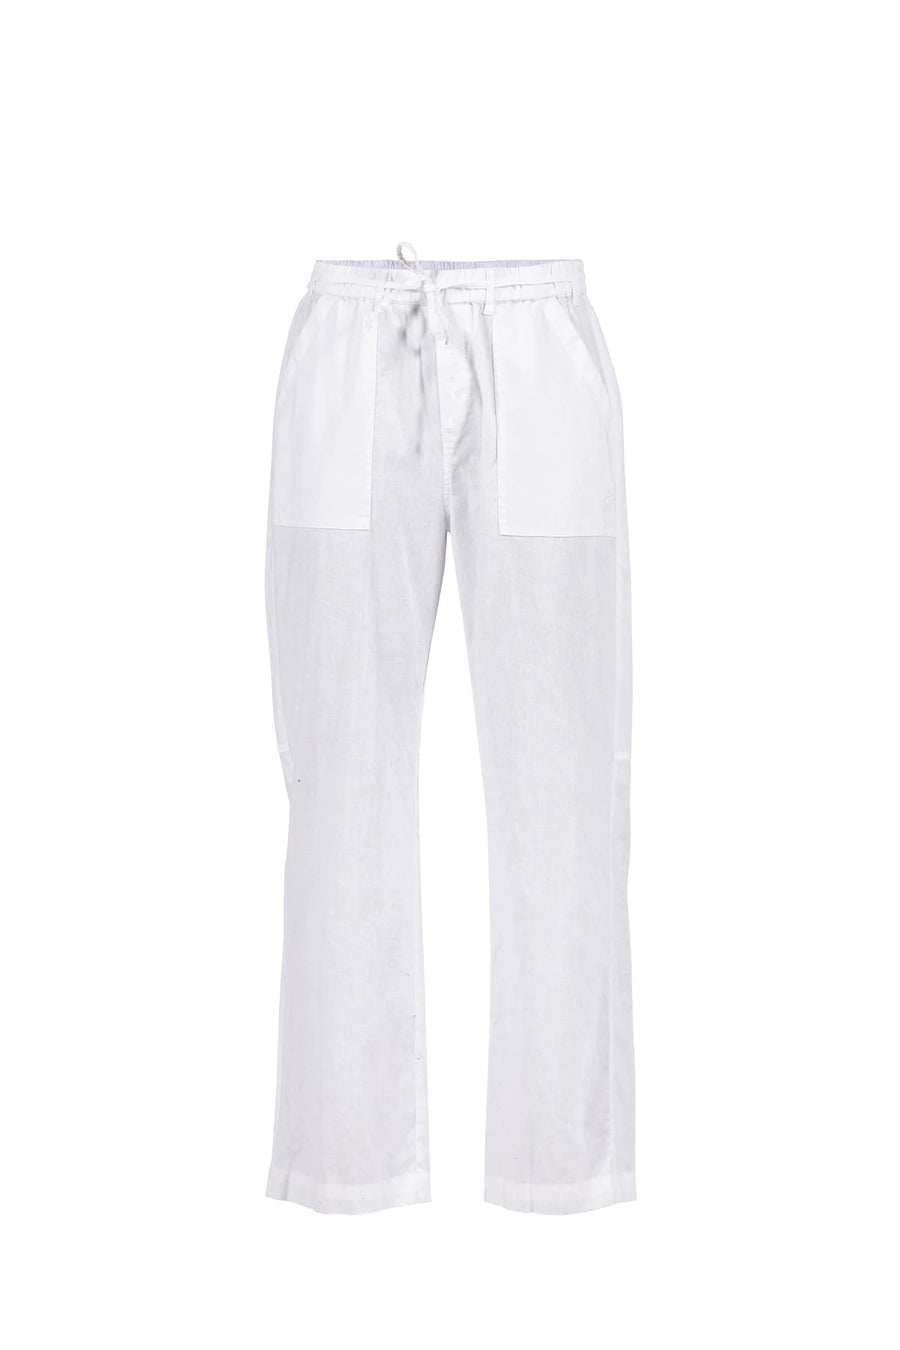 Blue Sportswear Jasmine "Cotton/Linen" Trousers - White